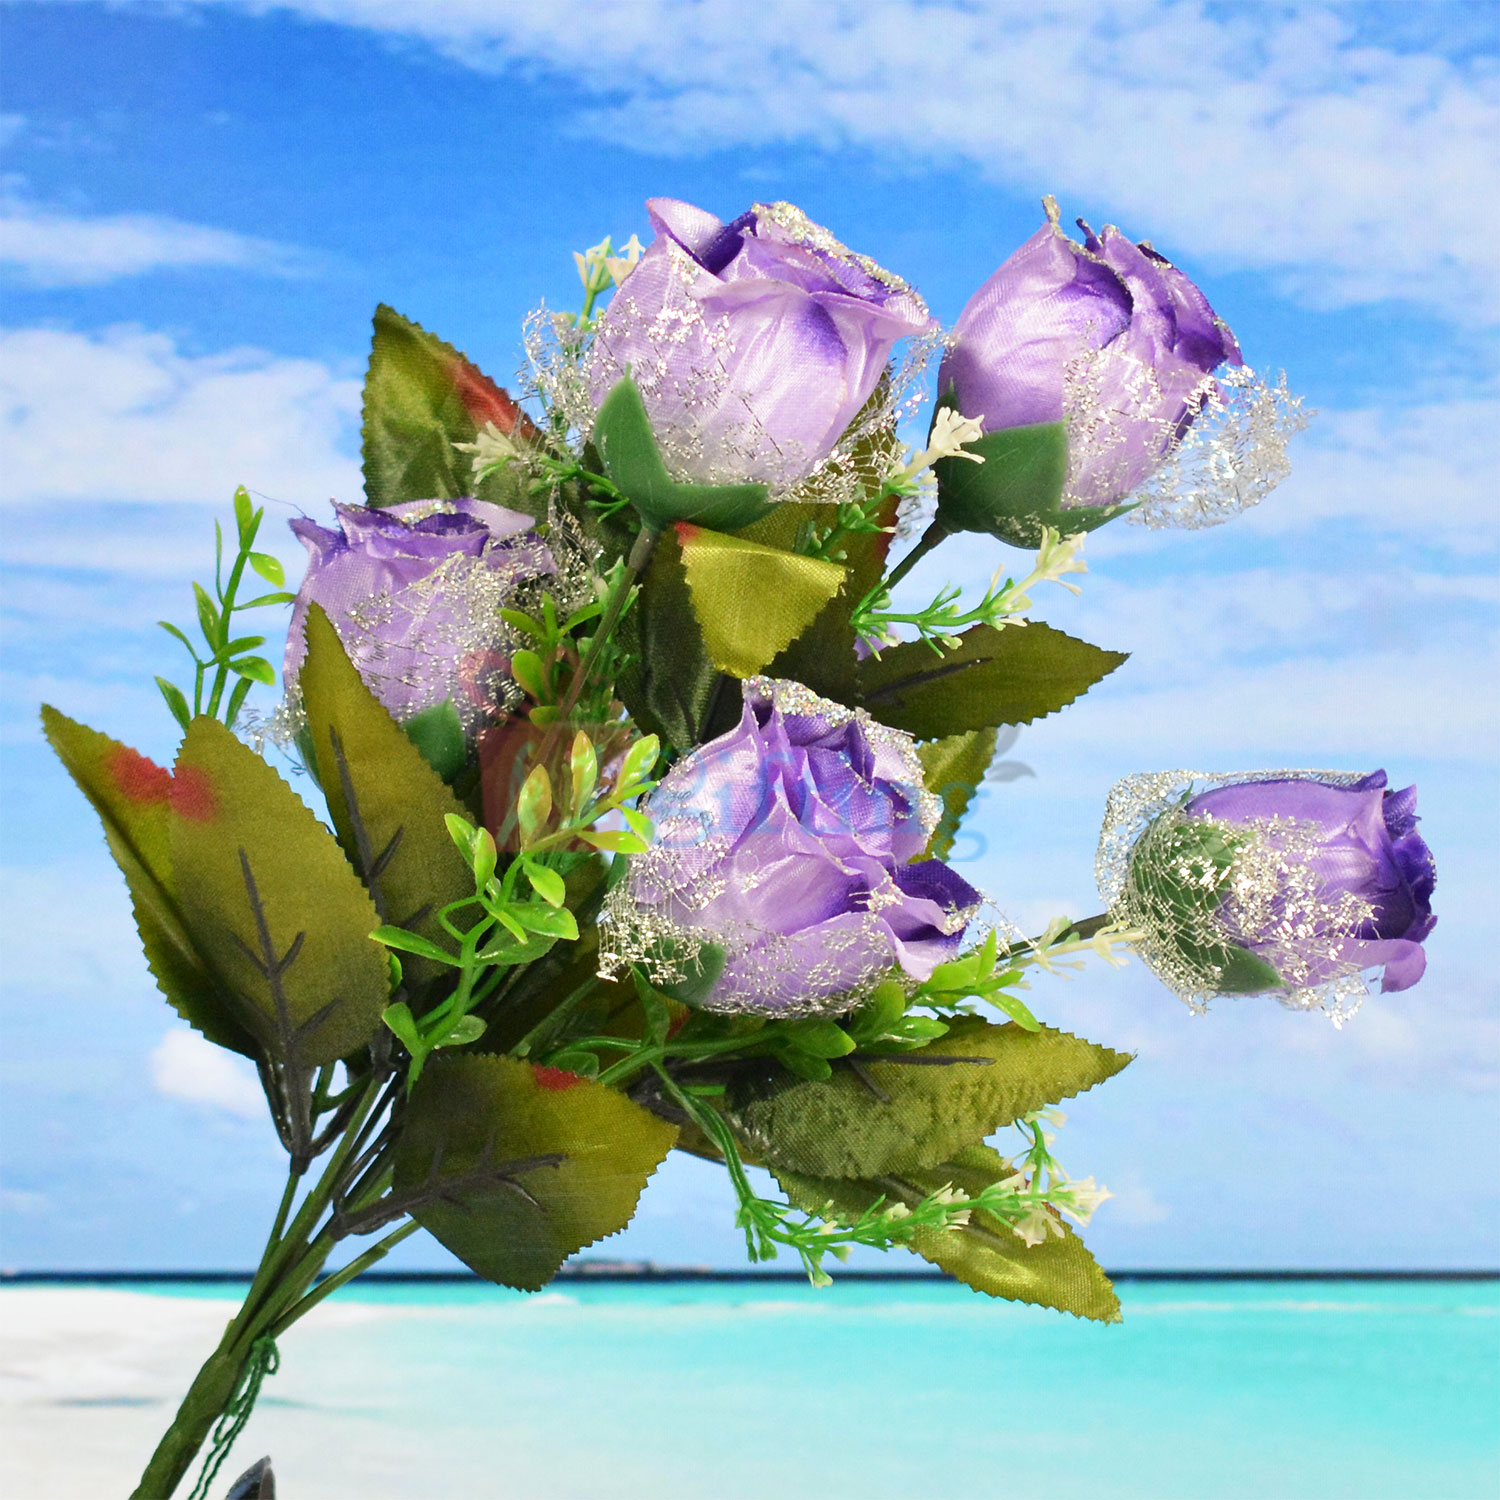 PurpleRose Flower Decorative Artificial Plant